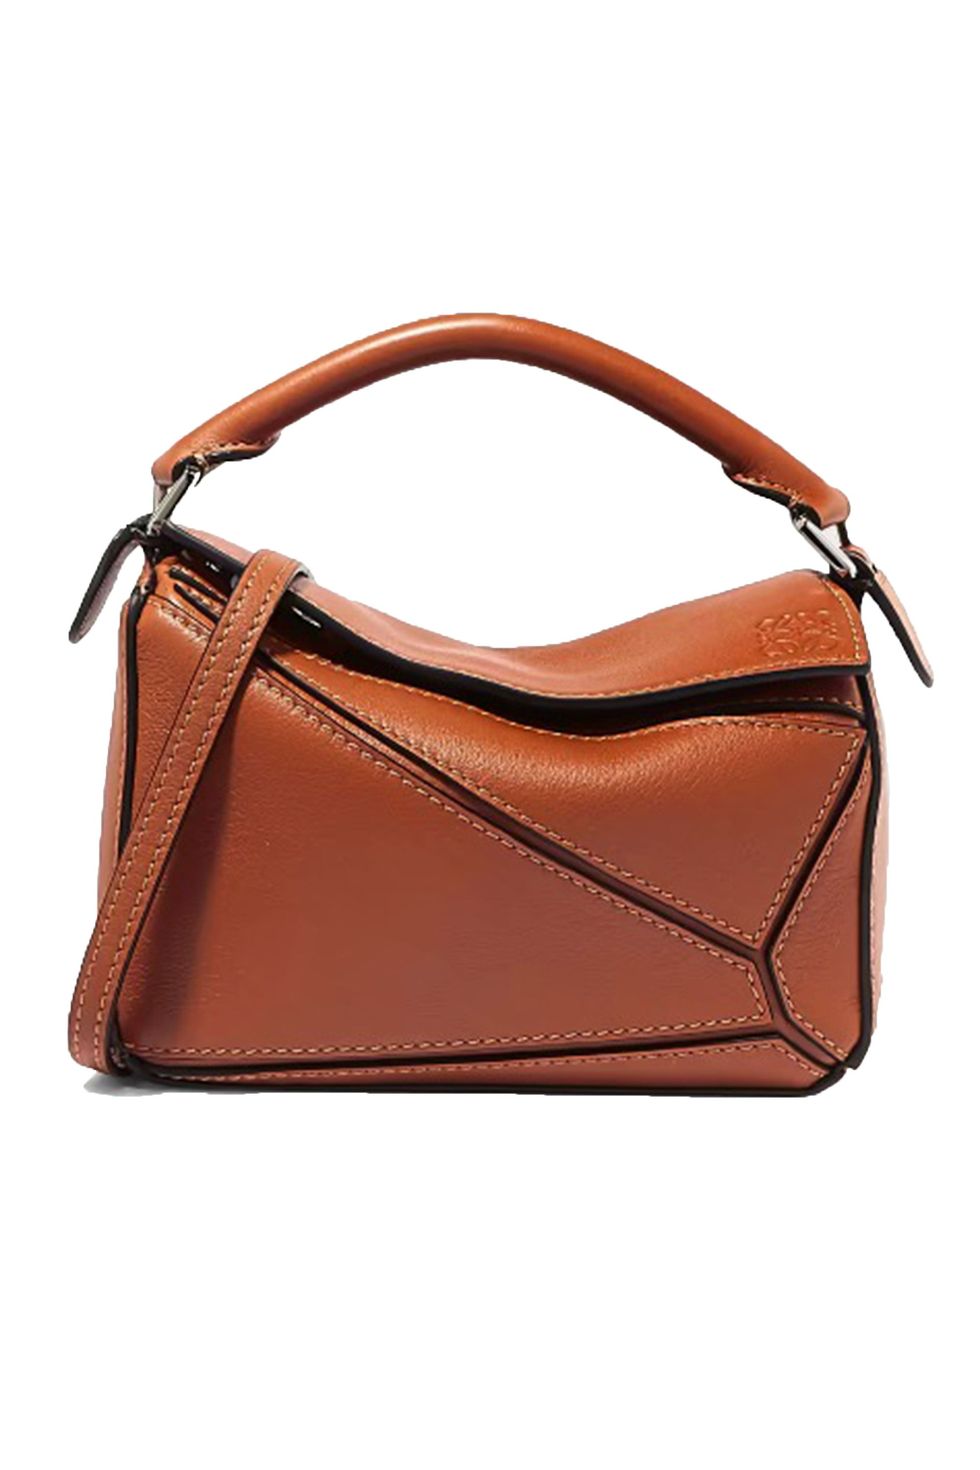 The leather handbag 